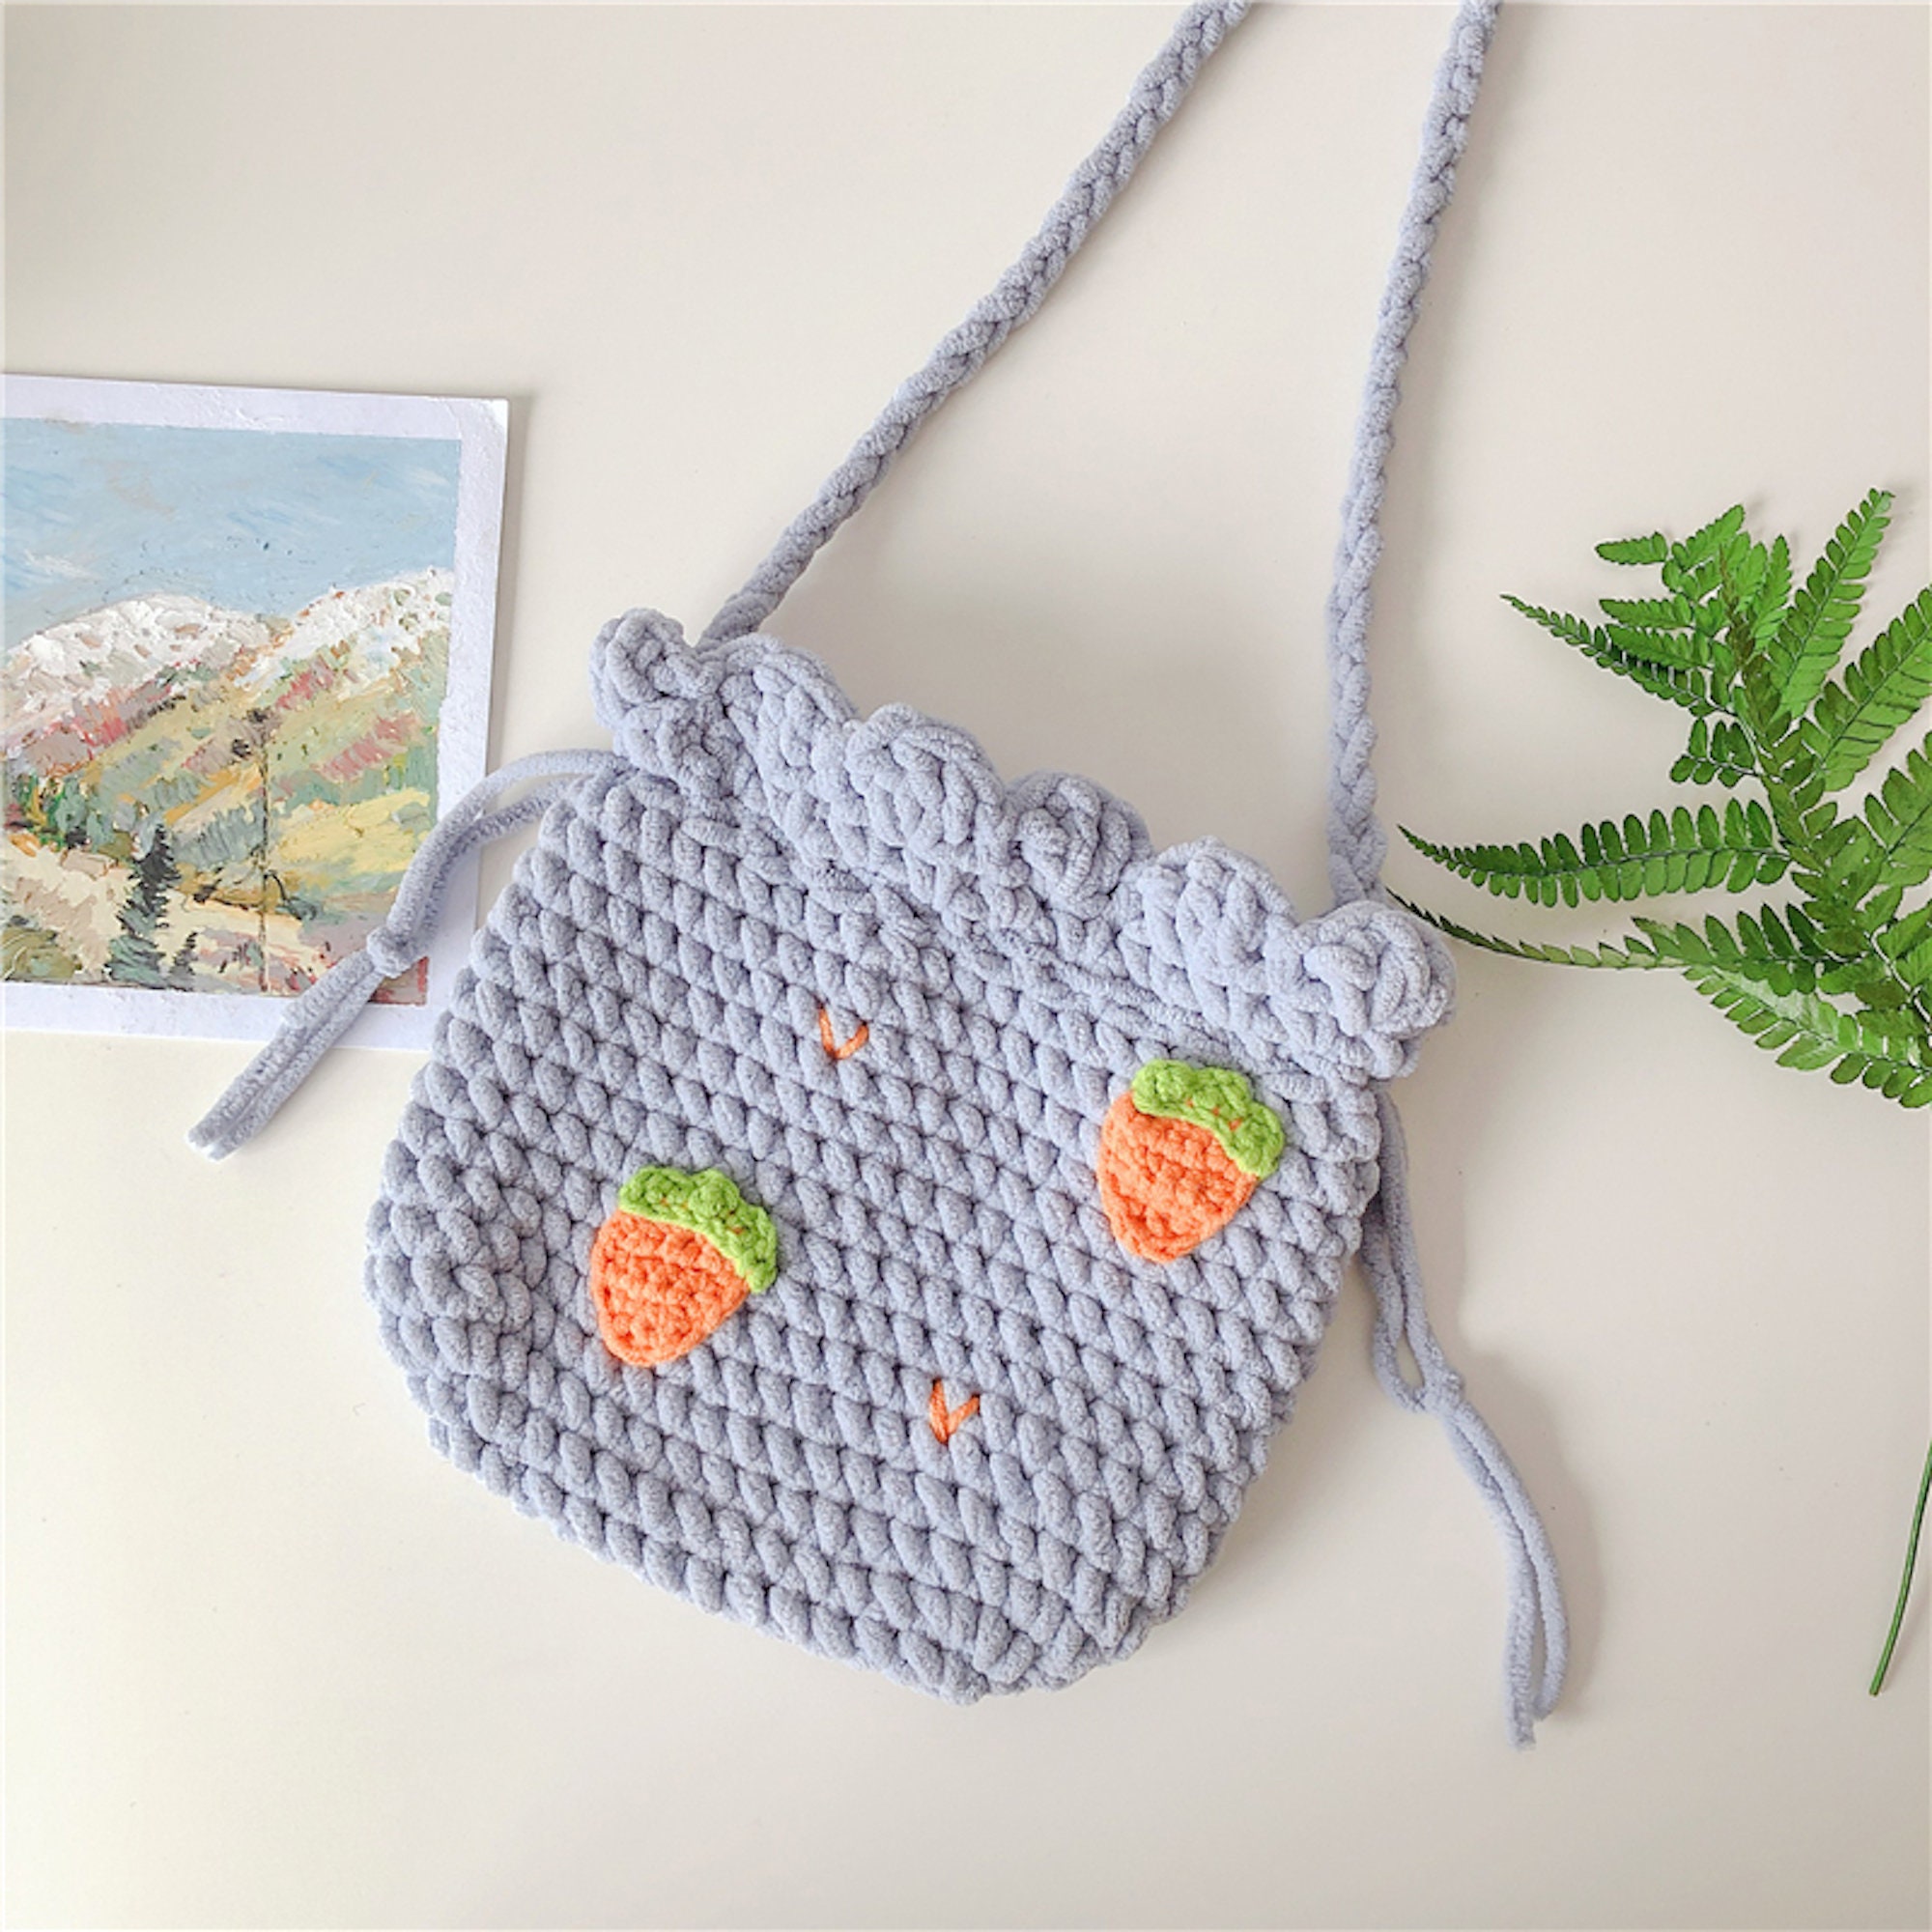 Crochet crossbody bags amigurumi strawberry bag crochet bag | Etsy